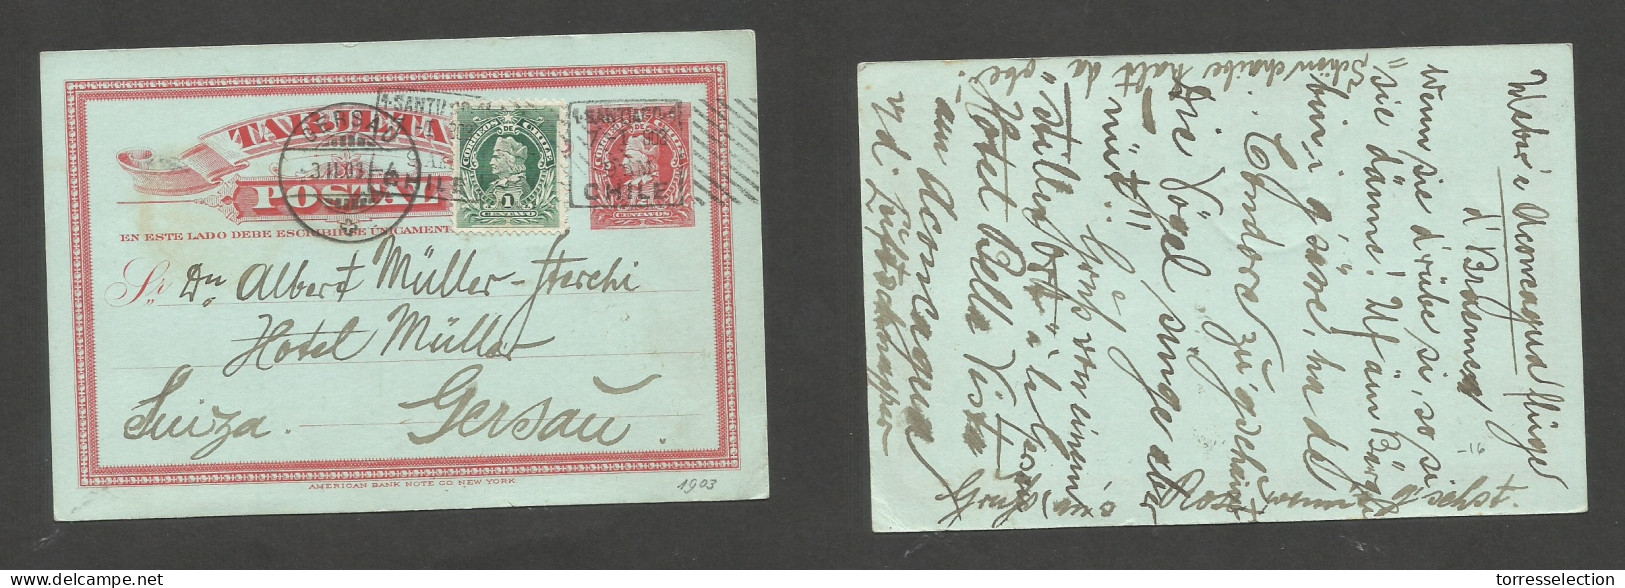 CHILE - Stationery. 1903 (7 Jan) Stgo - Switzerland, Gersan (3 Feb) 2c Red Stat Card + 1c Green Adtl, Tied Box Ds Grill. - Chili